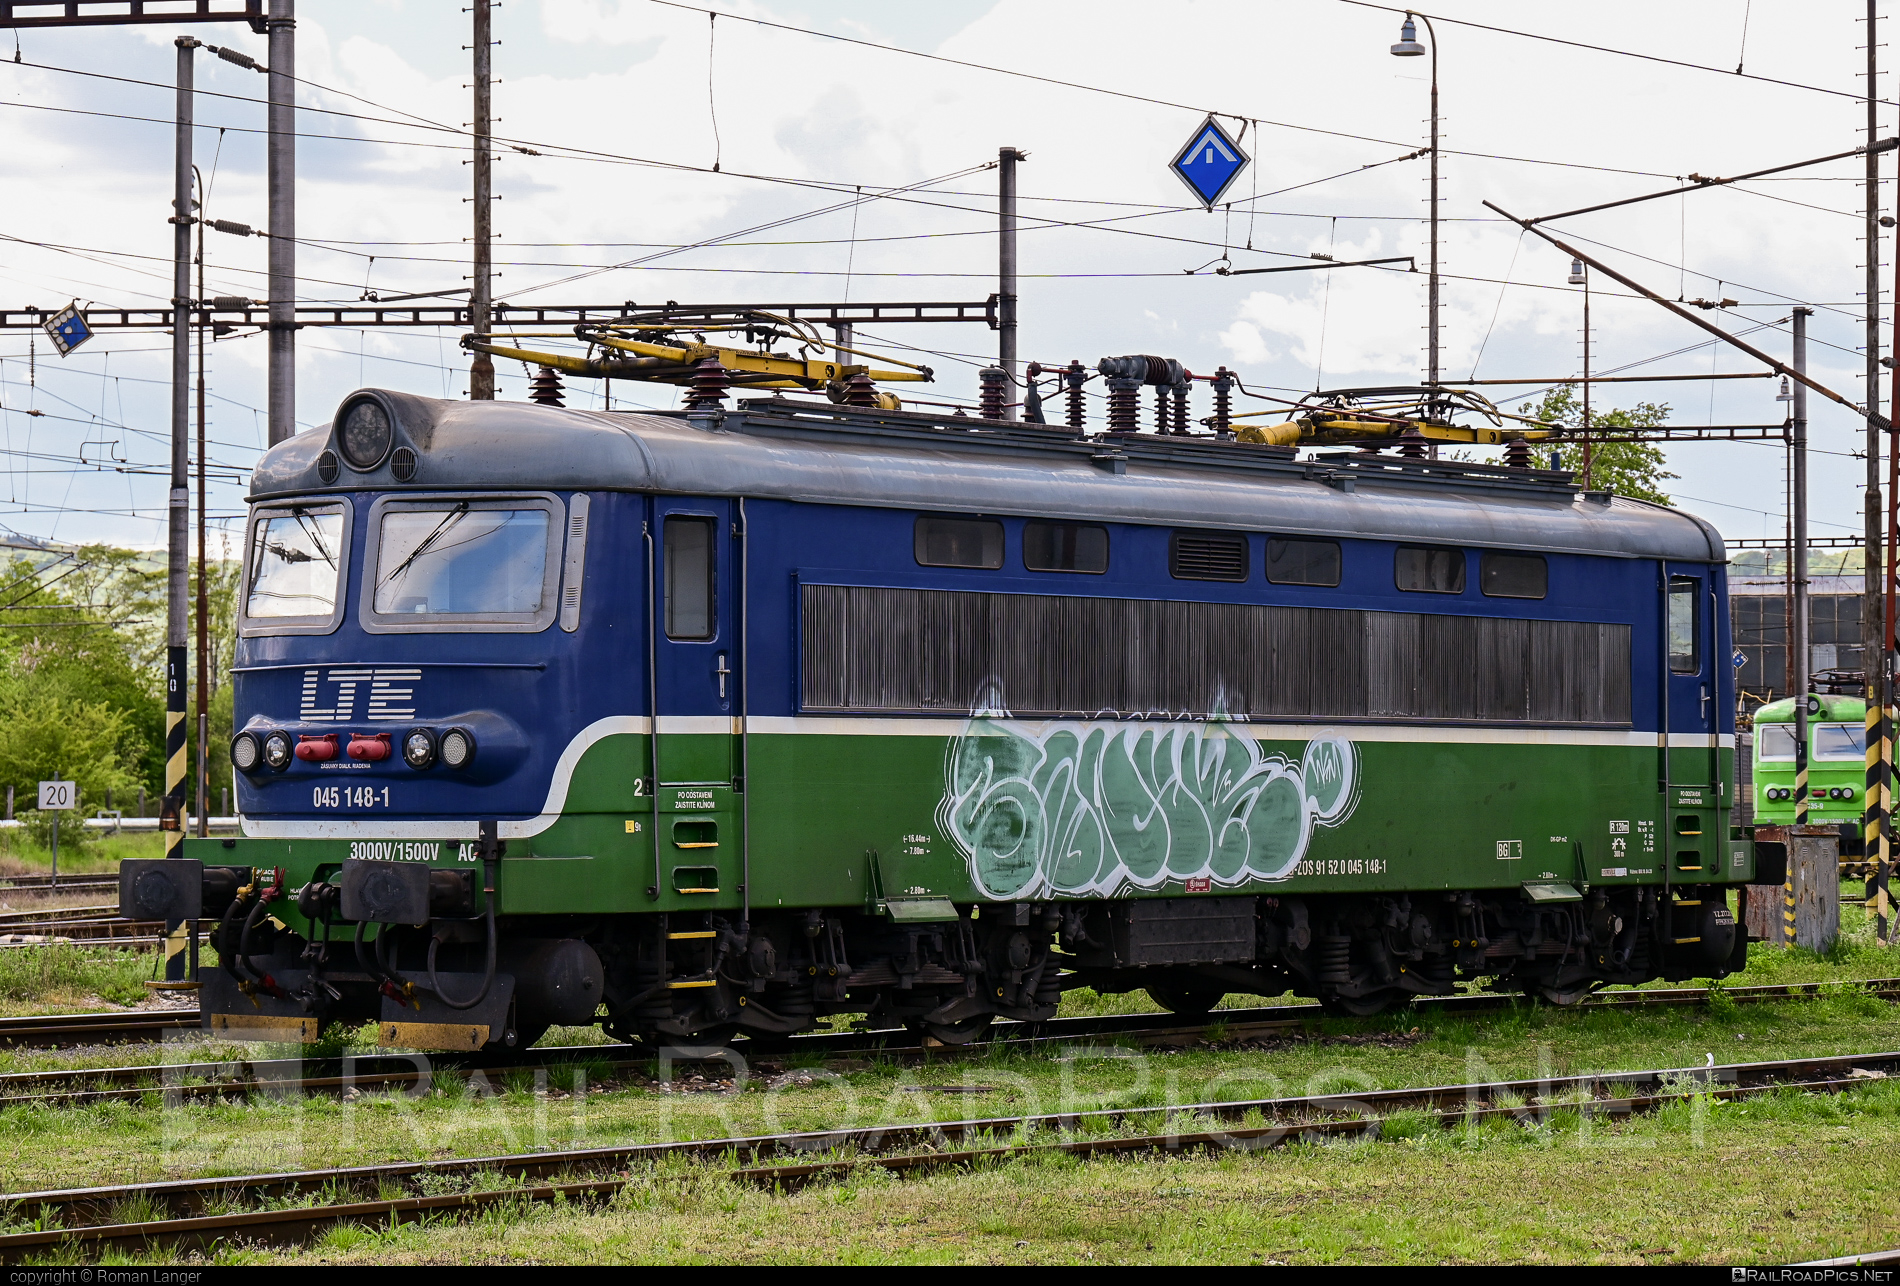 Škoda 73E - 045 148-1 operated by LTE Logistik a Transport Slovakia, s.r.o. #graffiti #locomotive242 #lte #plechac #skoda #skoda73e #zoszvolen